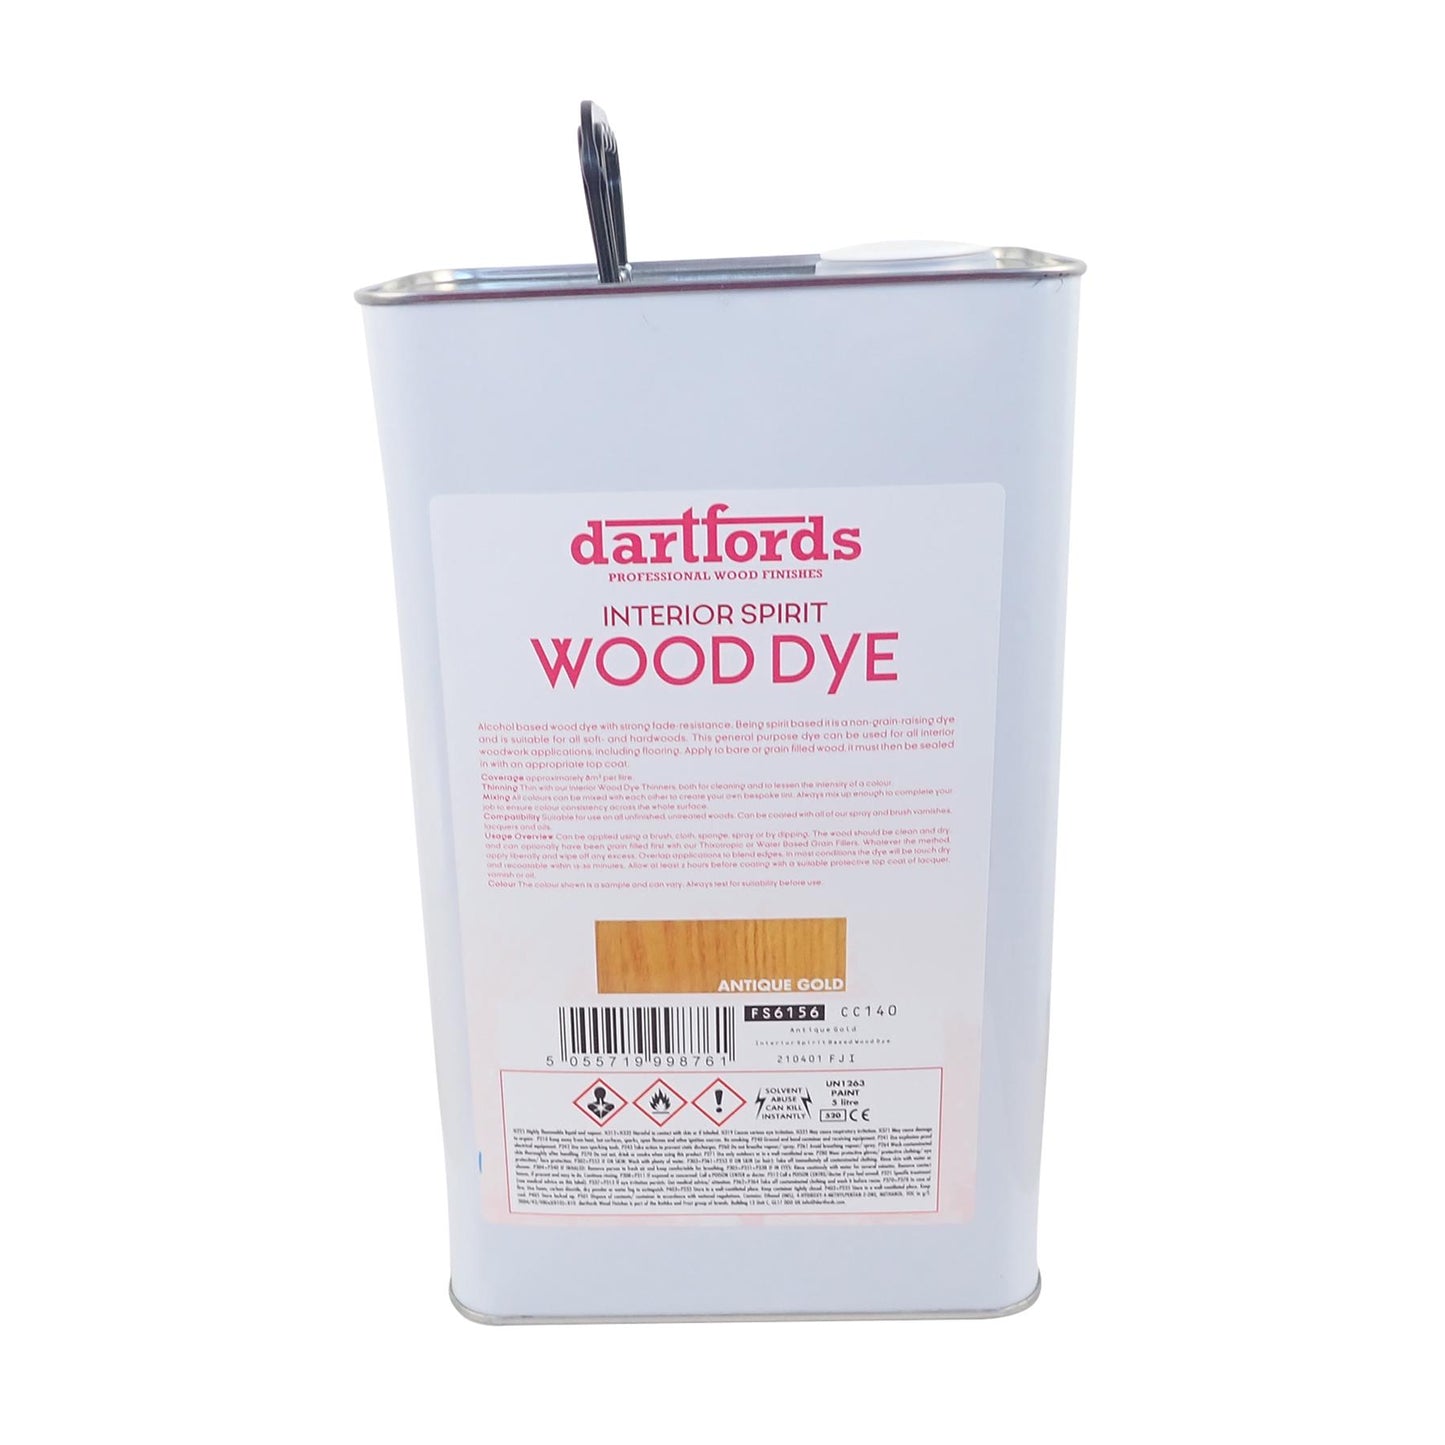 dartfords Antique Gold Interior Spirit Based Wood Dye - 5 litre Jerrycan